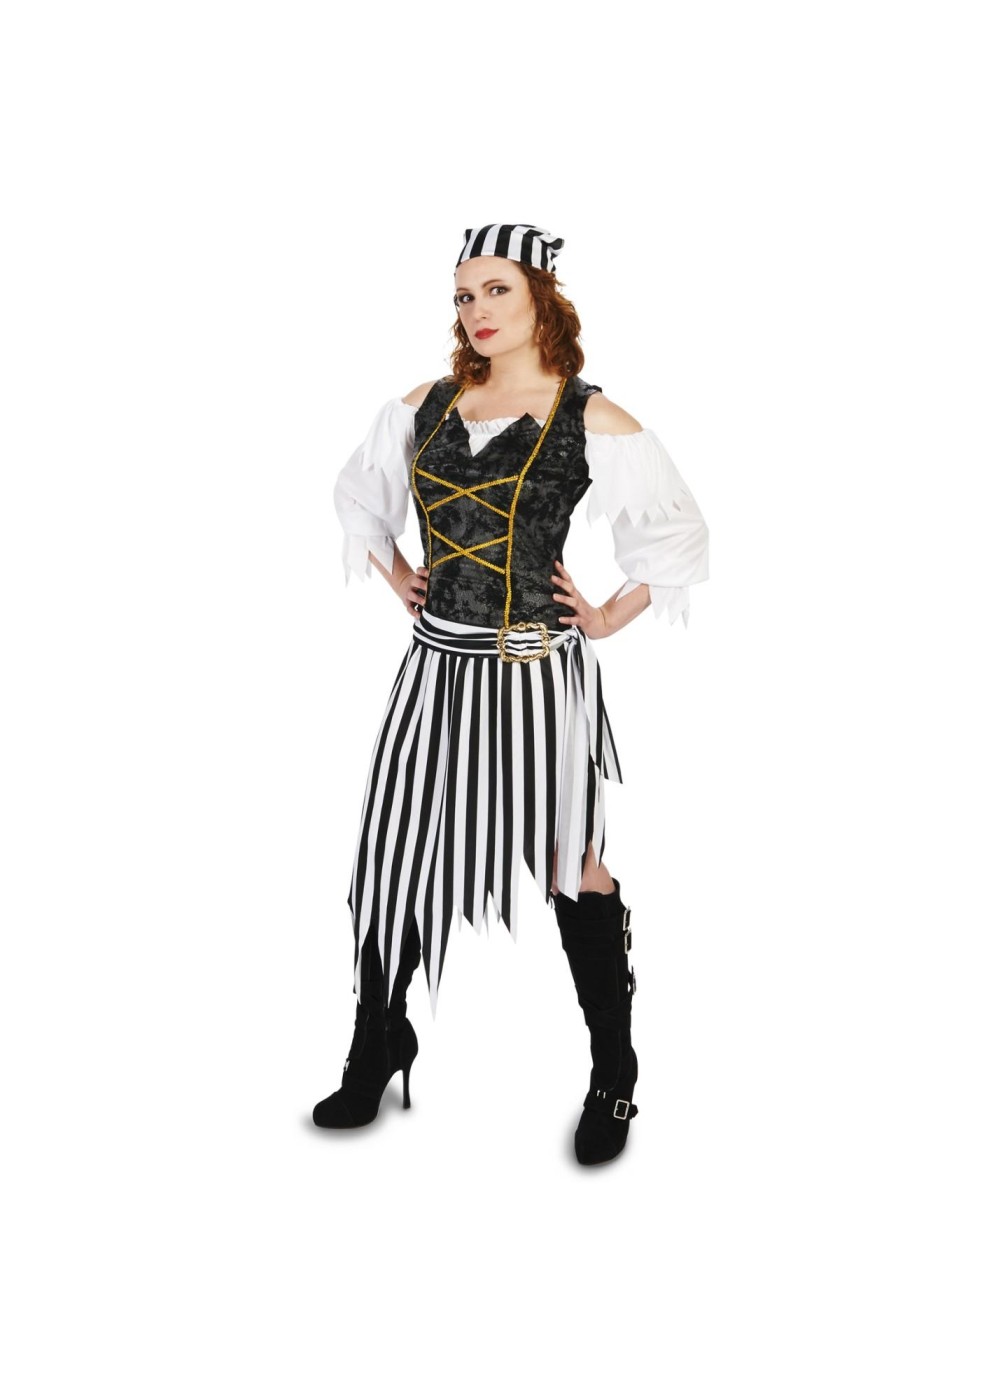 Women's Pirate Princess Costume